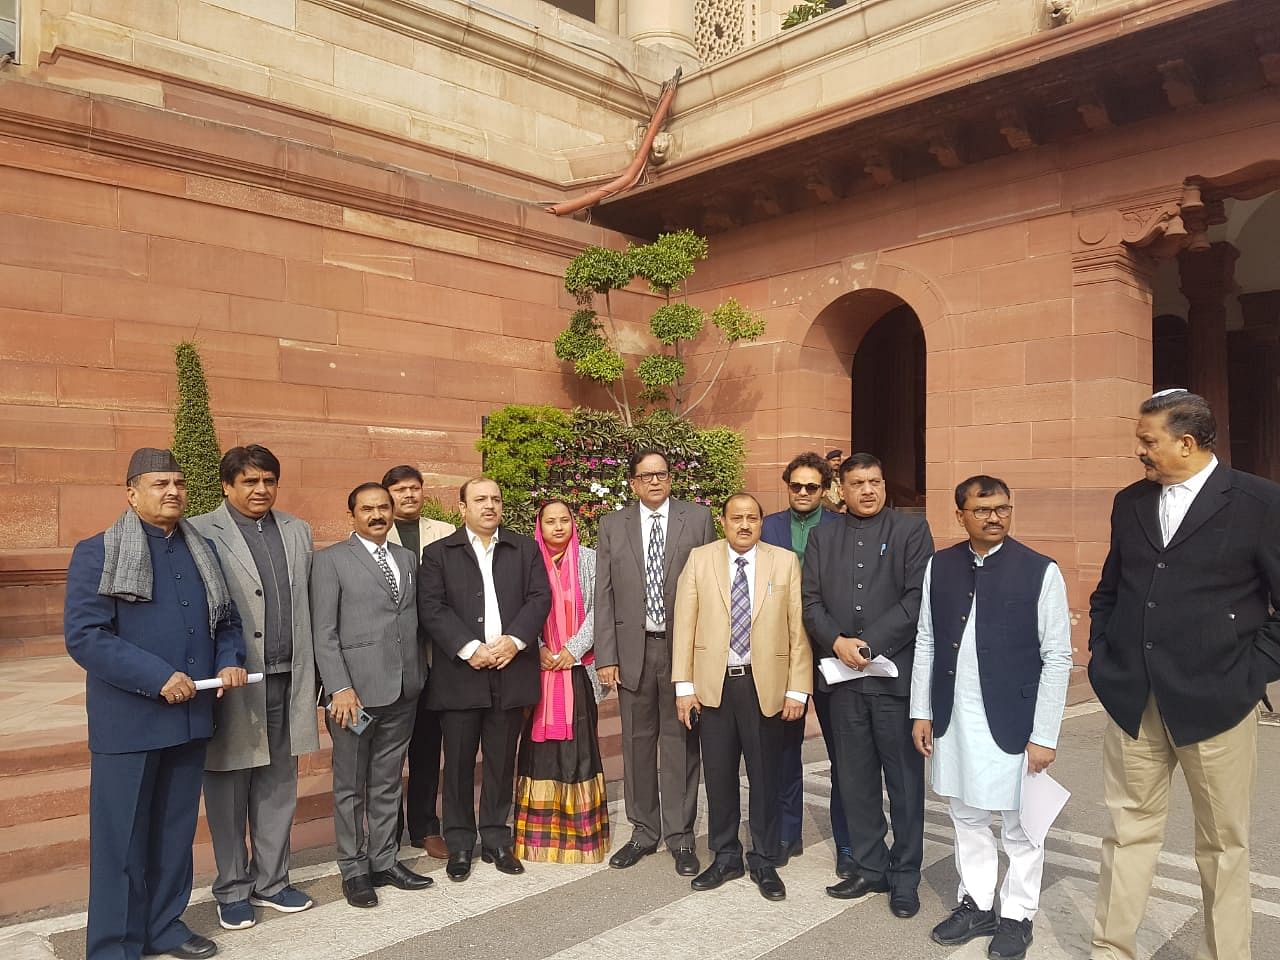 A Bahujan Samaj Party (BSP) parliamentary delegation is meeting President Ram Nath Kovind over the Citizenship (Amendment) Act. Photo/ANI